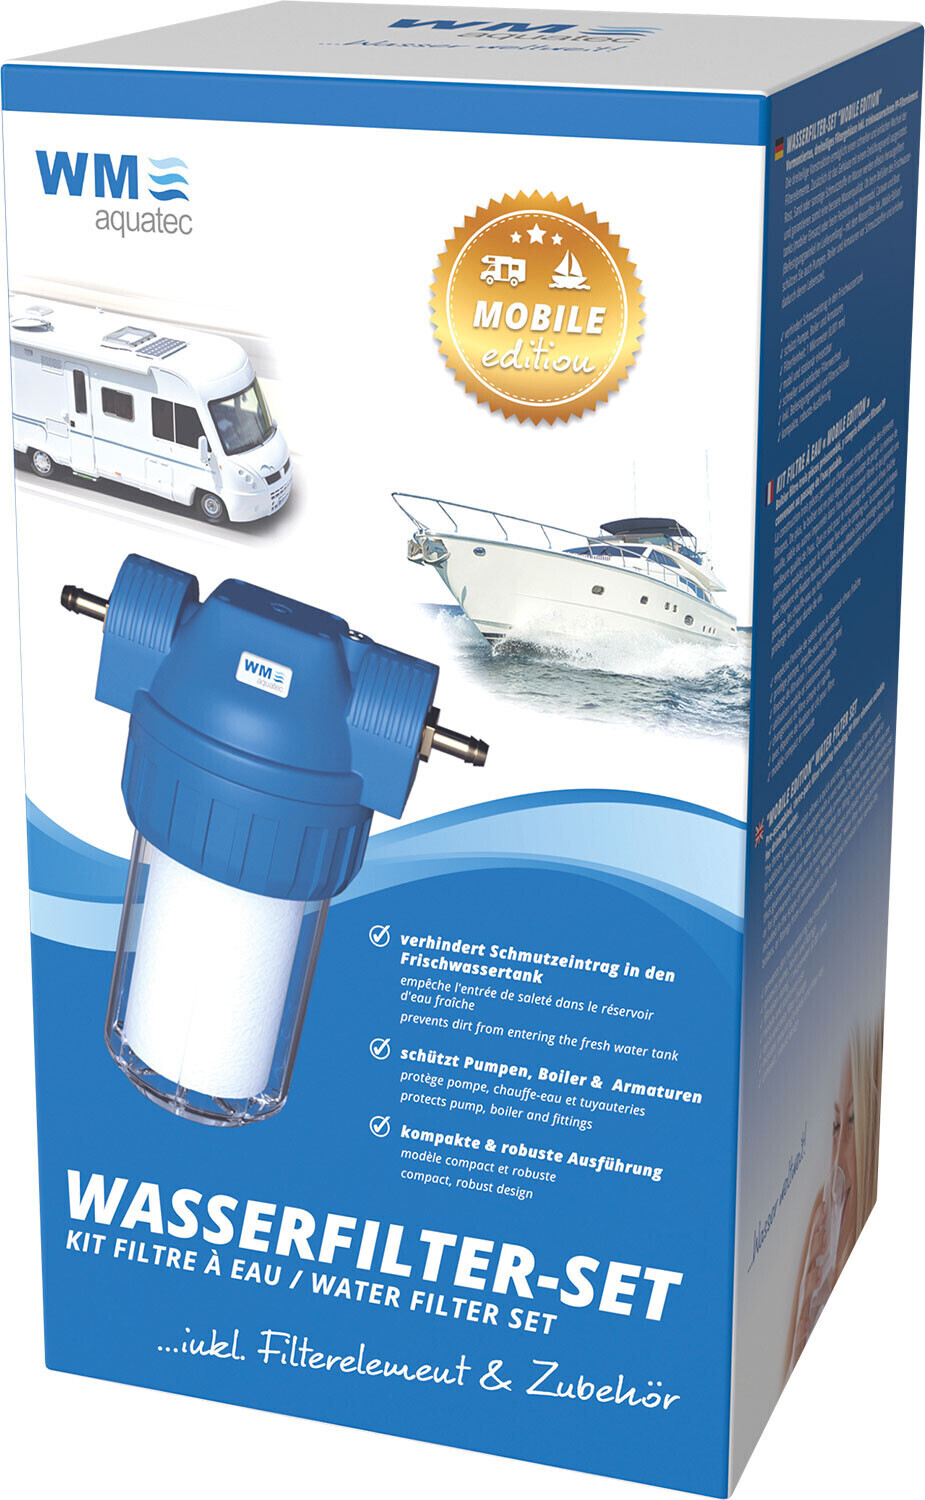 WM aquatec Wasserfilter-Set Mobile Edition ab 39,99